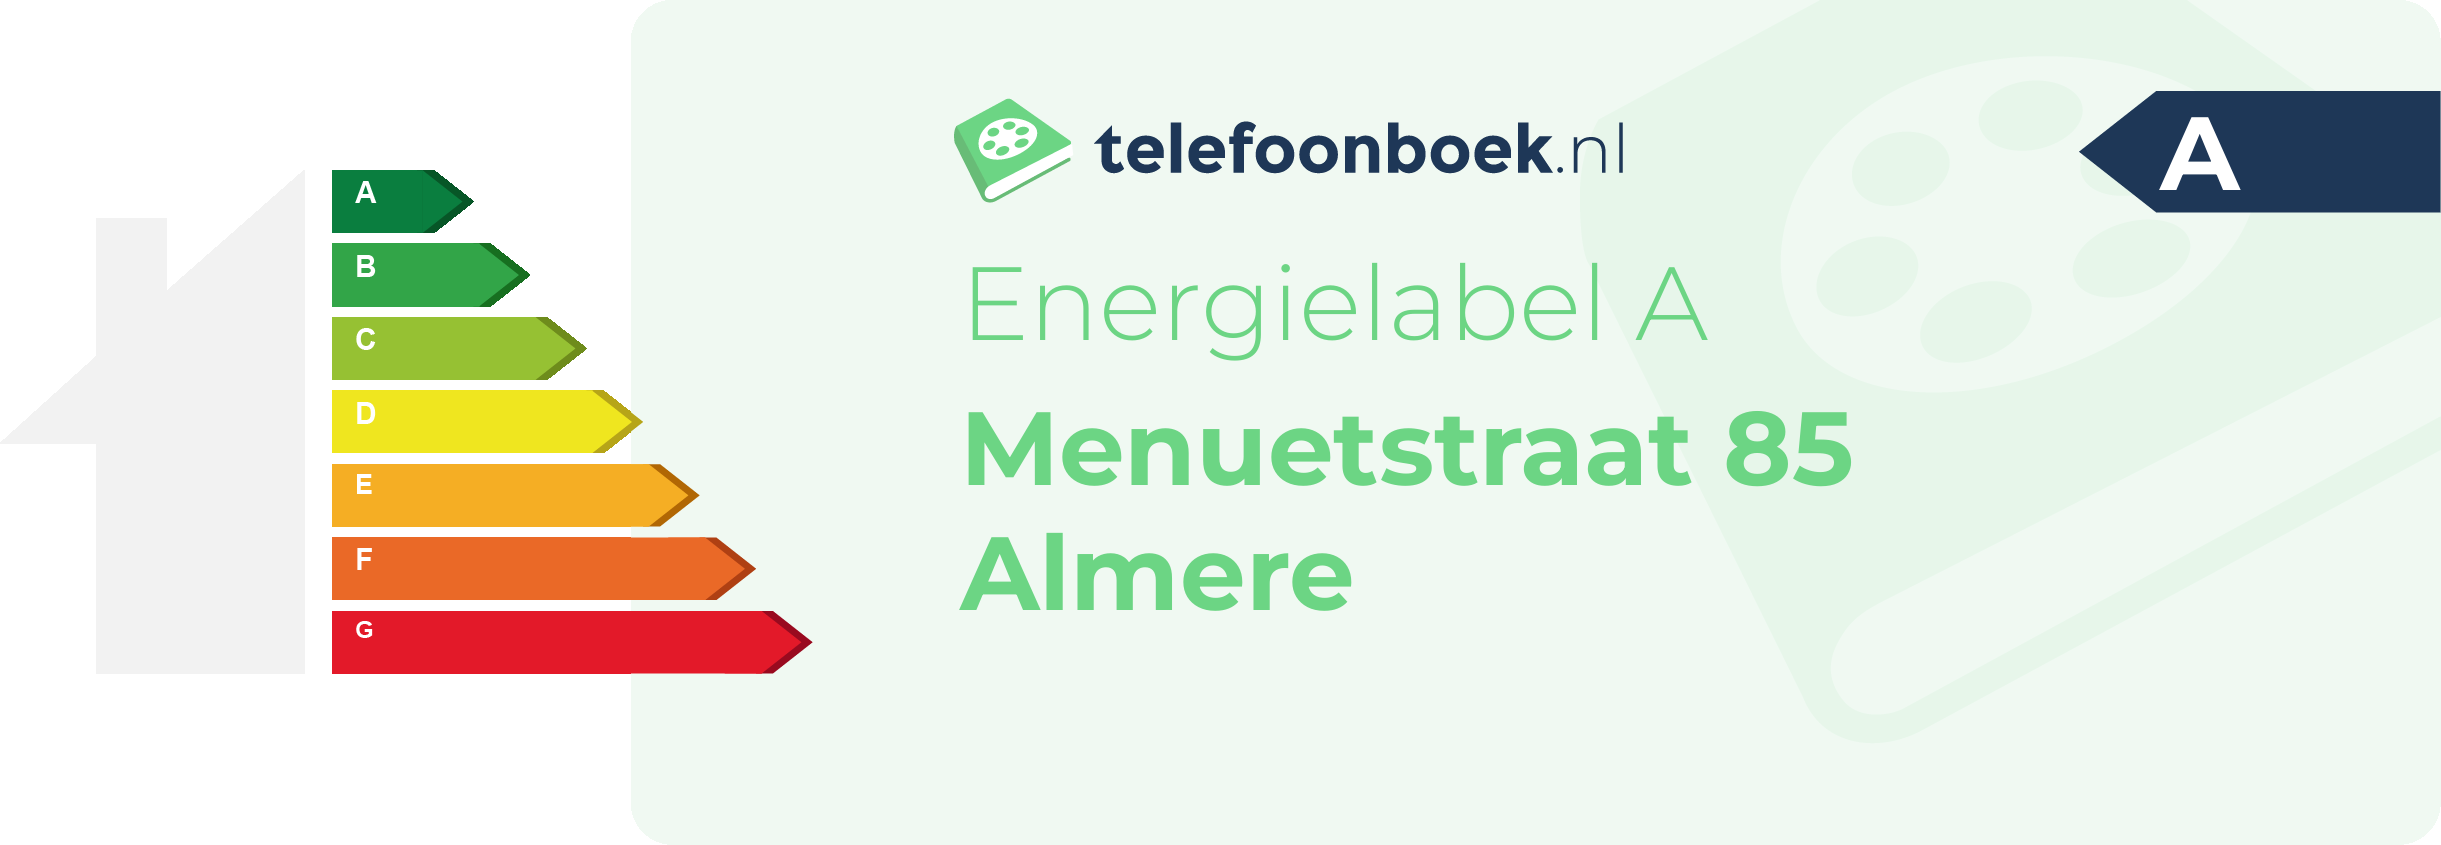 Energielabel Menuetstraat 85 Almere